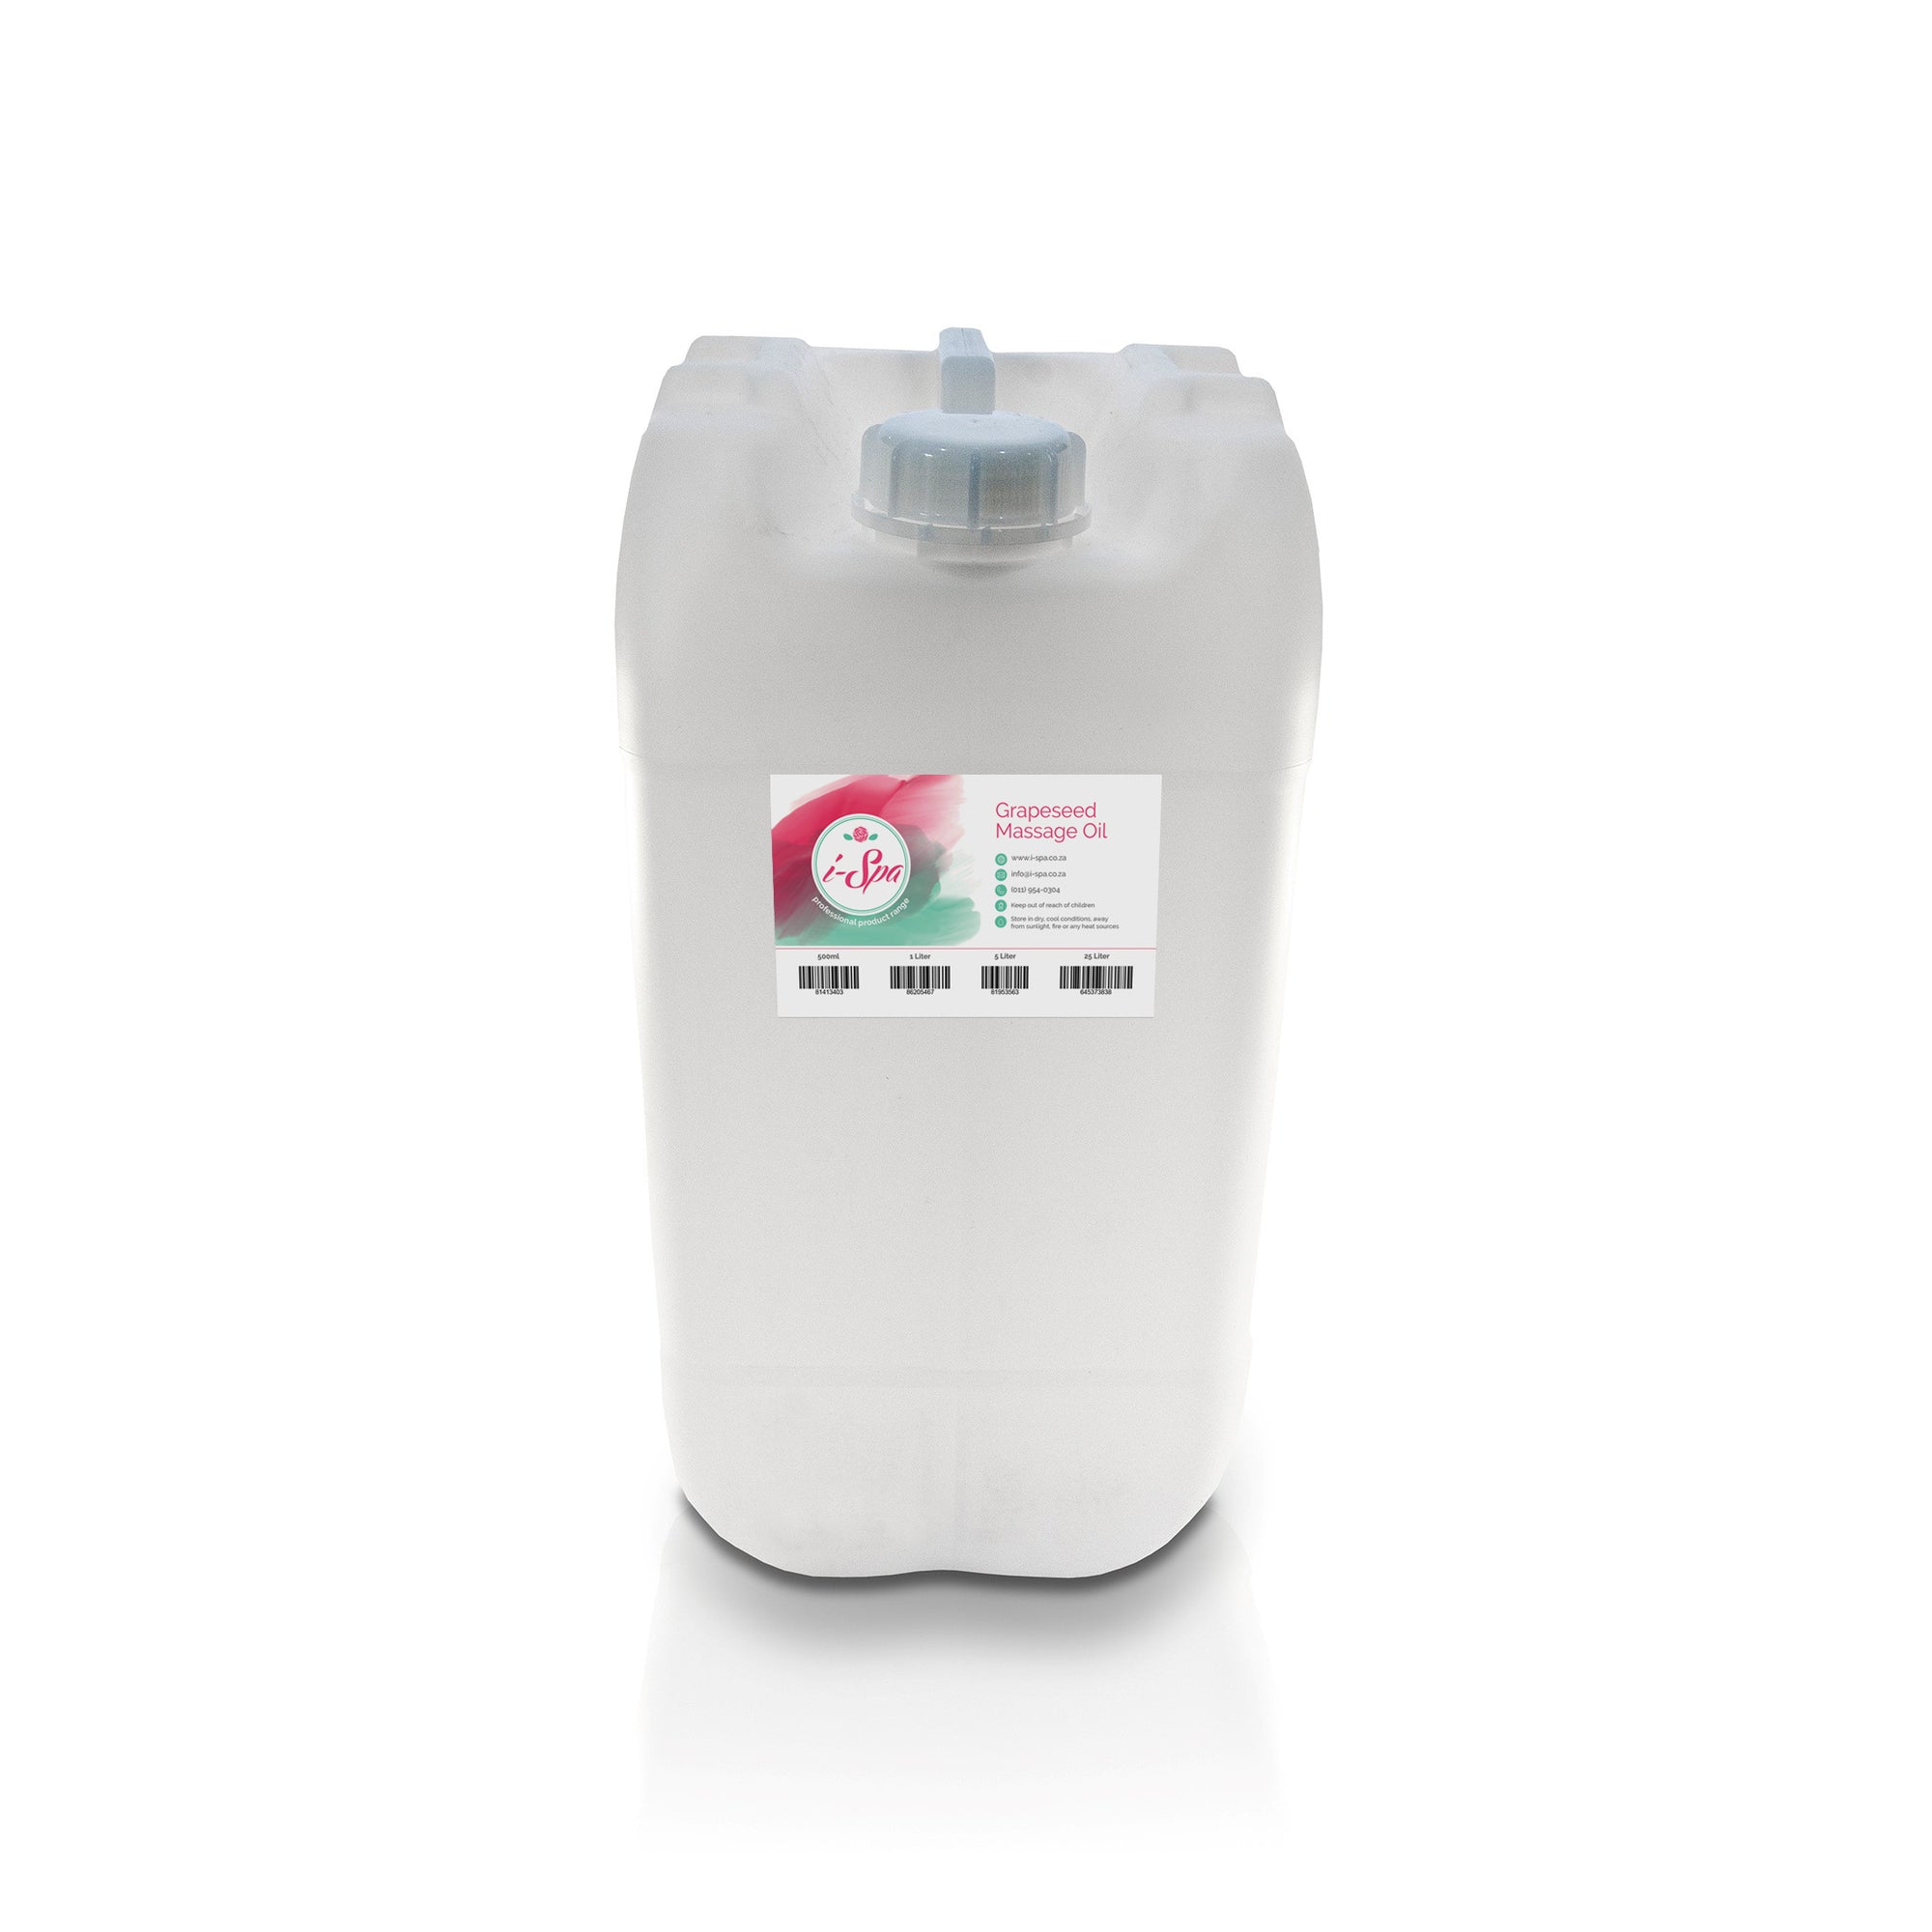 Grapeseed Massage Oil - 25 Liter